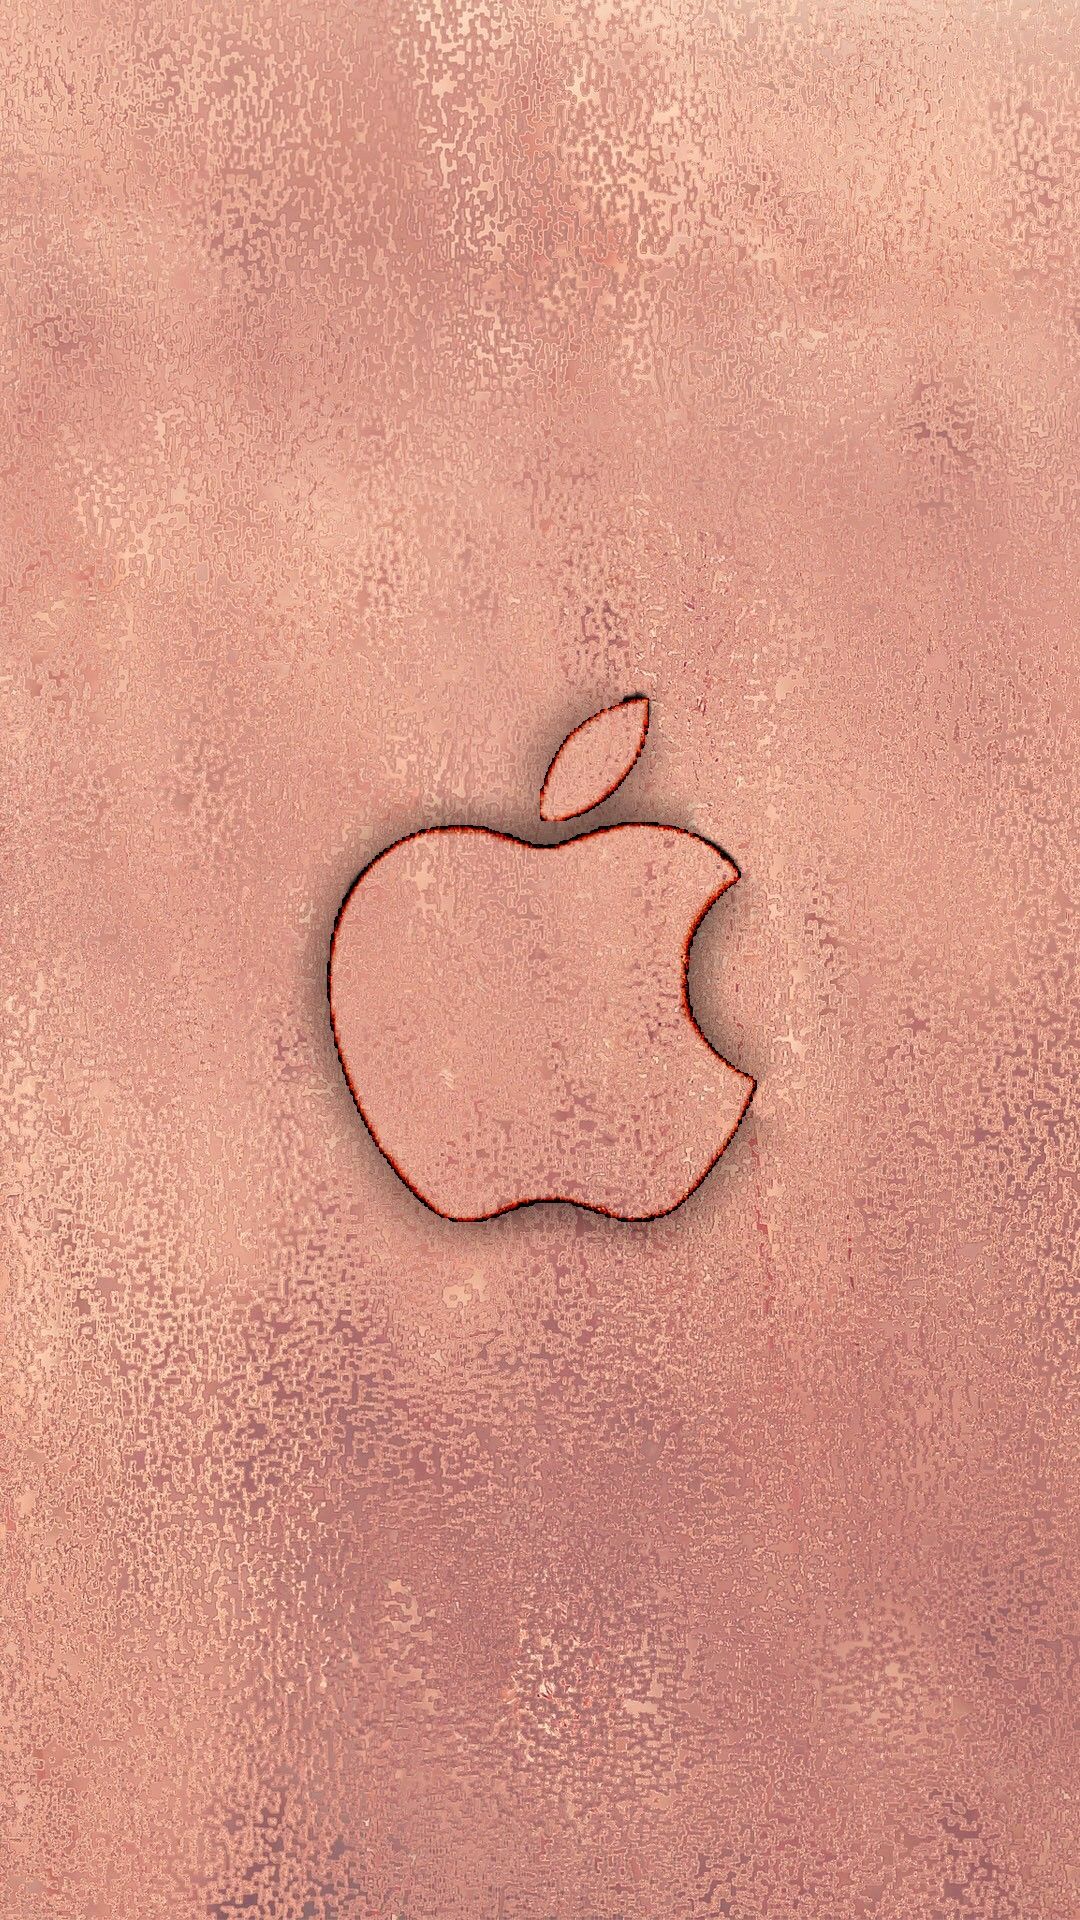 Wallpaper. Apple logo wallpaper iphone, Apple wallpaper iphone, Apple iphone wallpaper hd